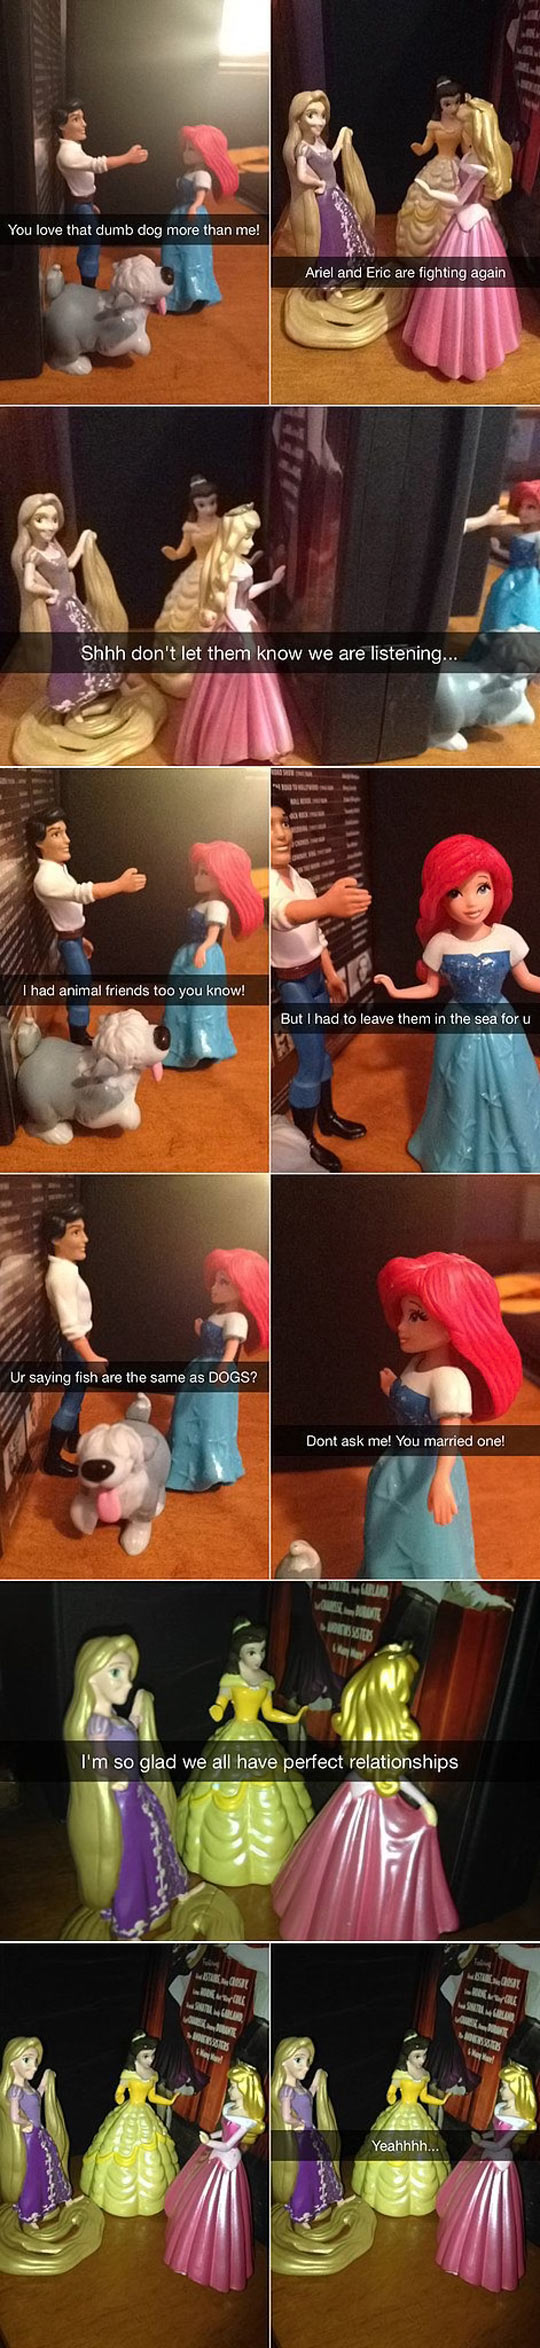 Disney Princesses deal with dating drama…